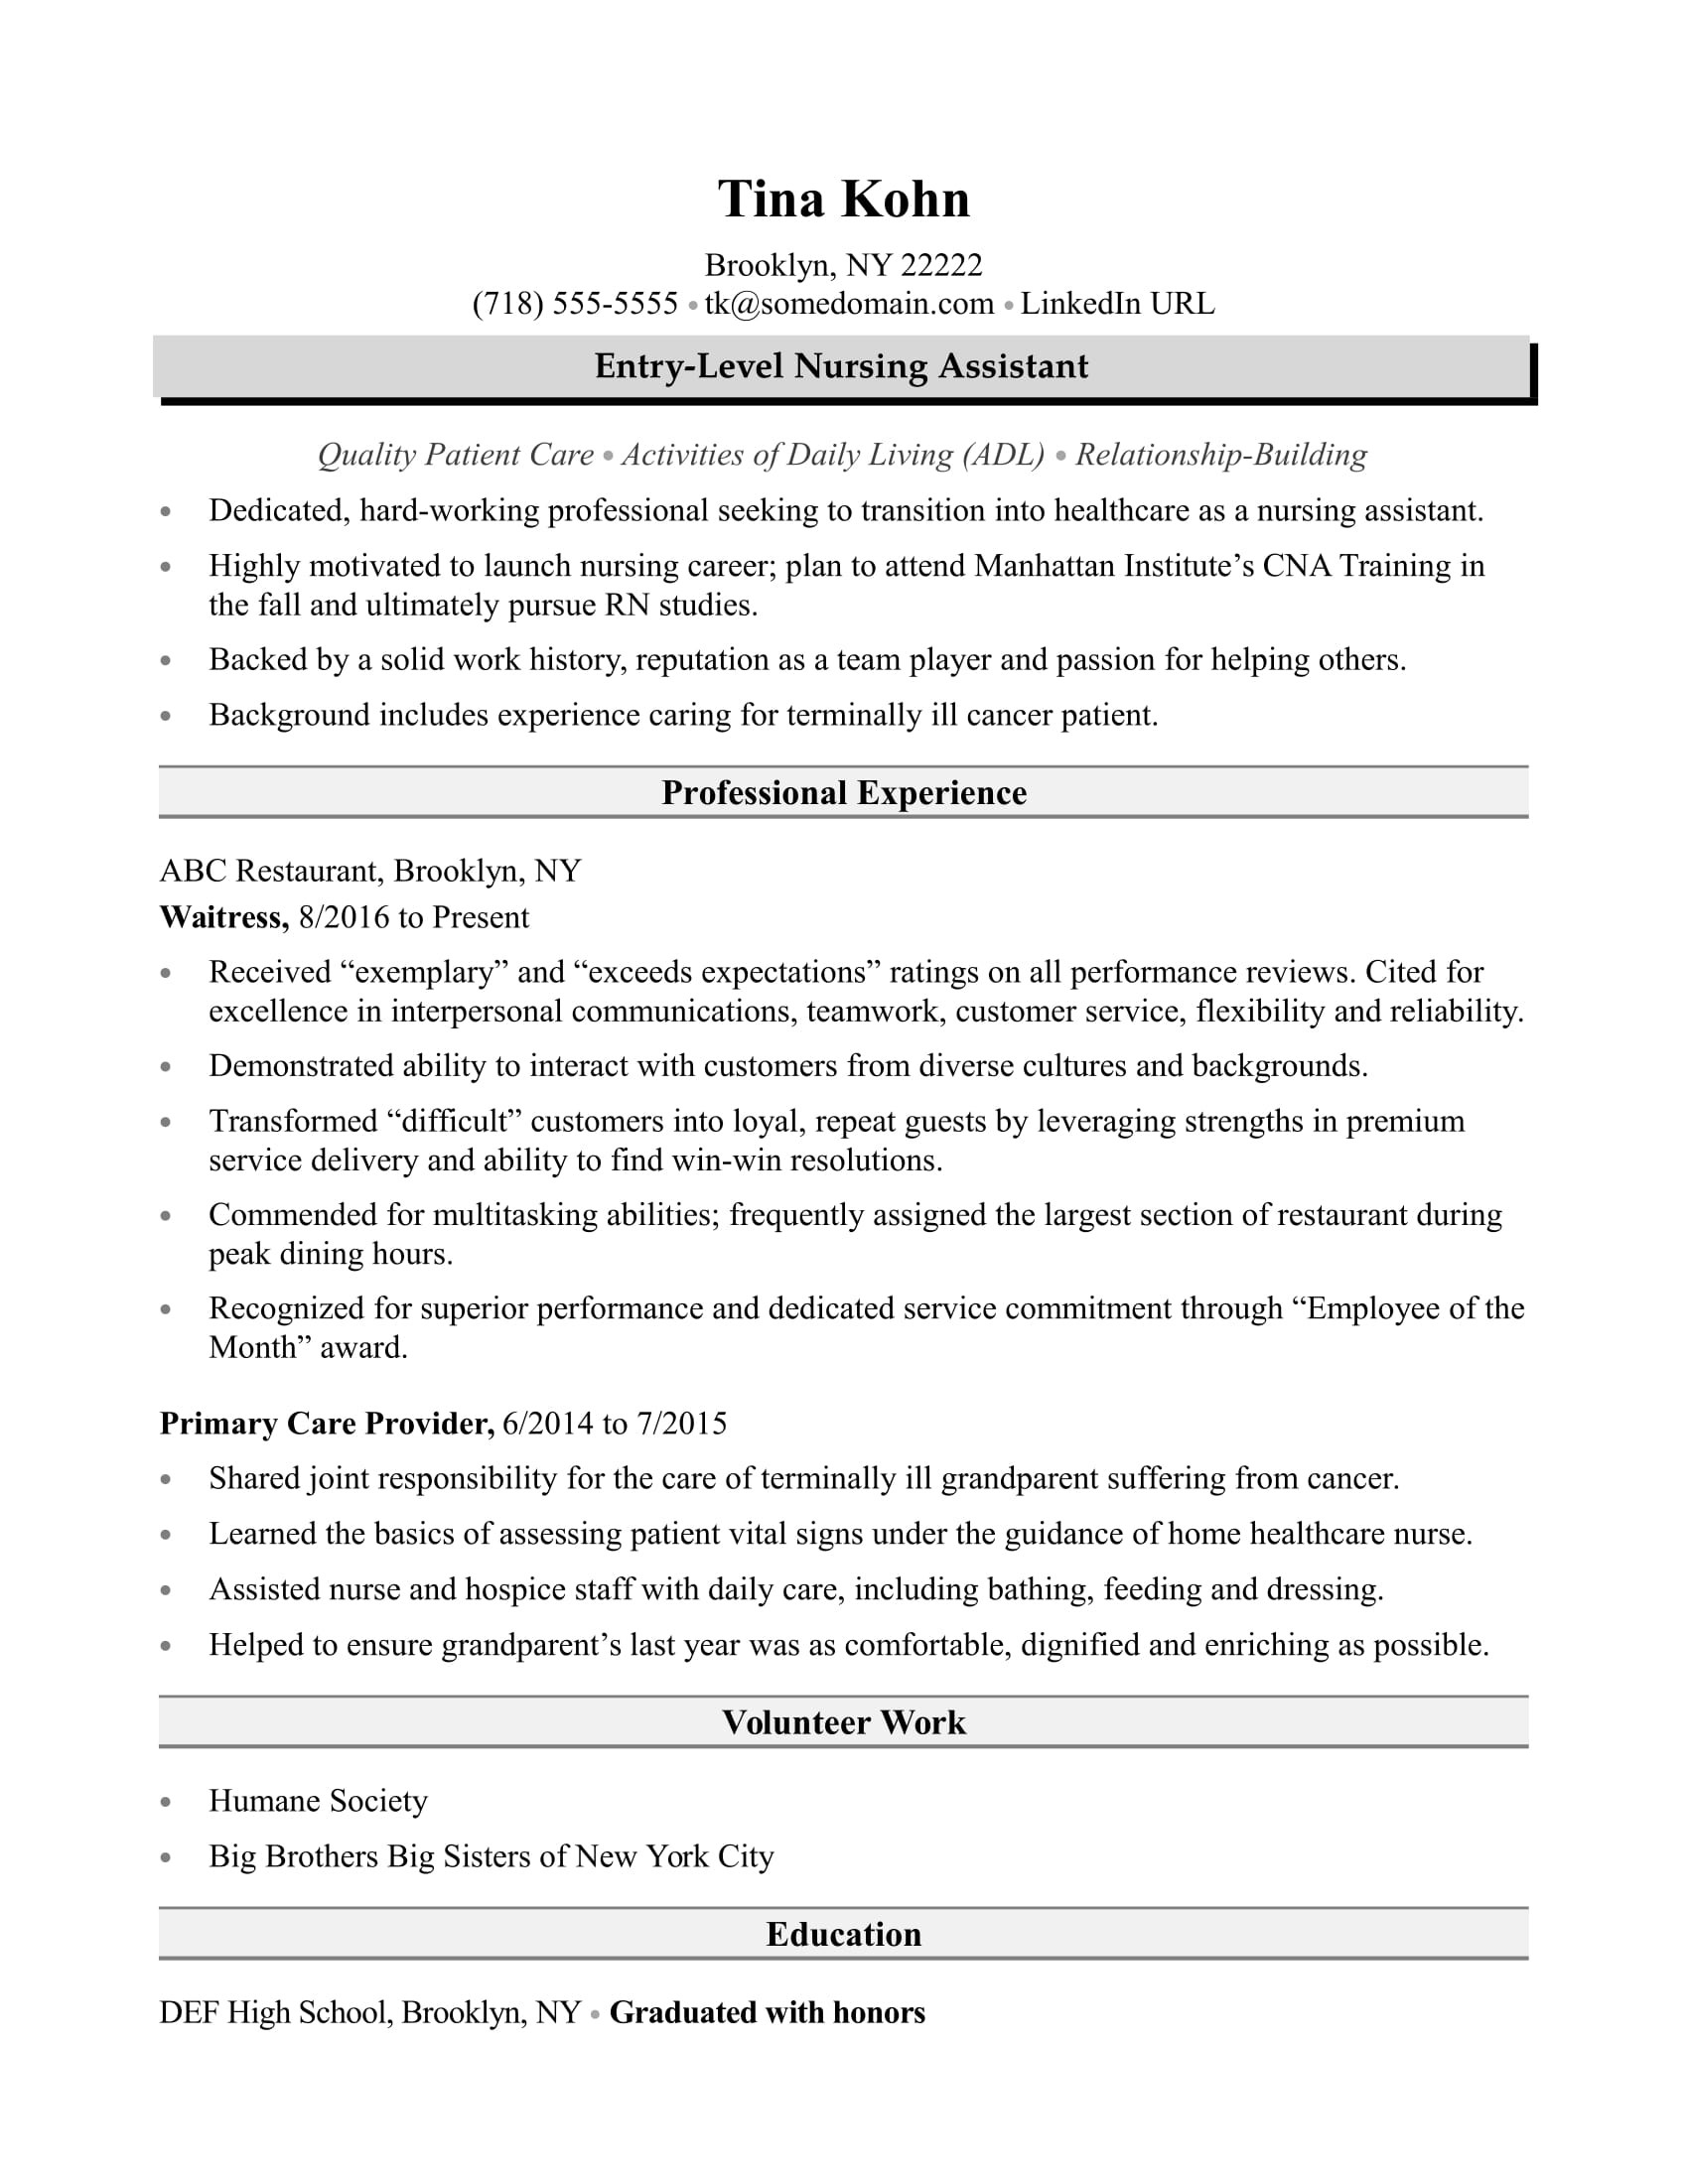 Sample Resume for Personal Care Provider Nursing assistant Resume Sample Monster.com